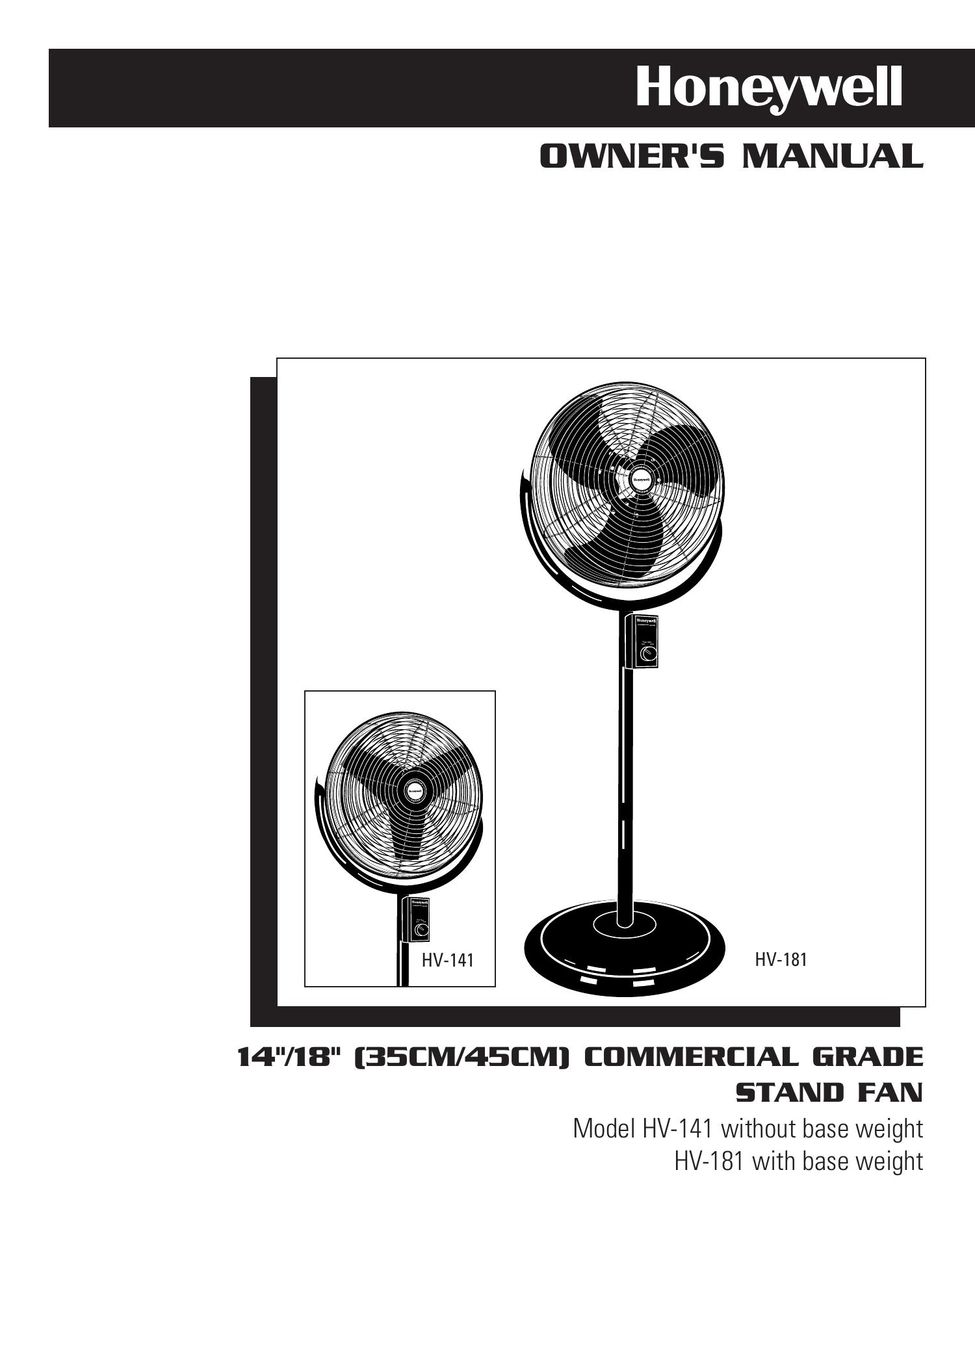 Honeywell HV-141 Fan User Manual